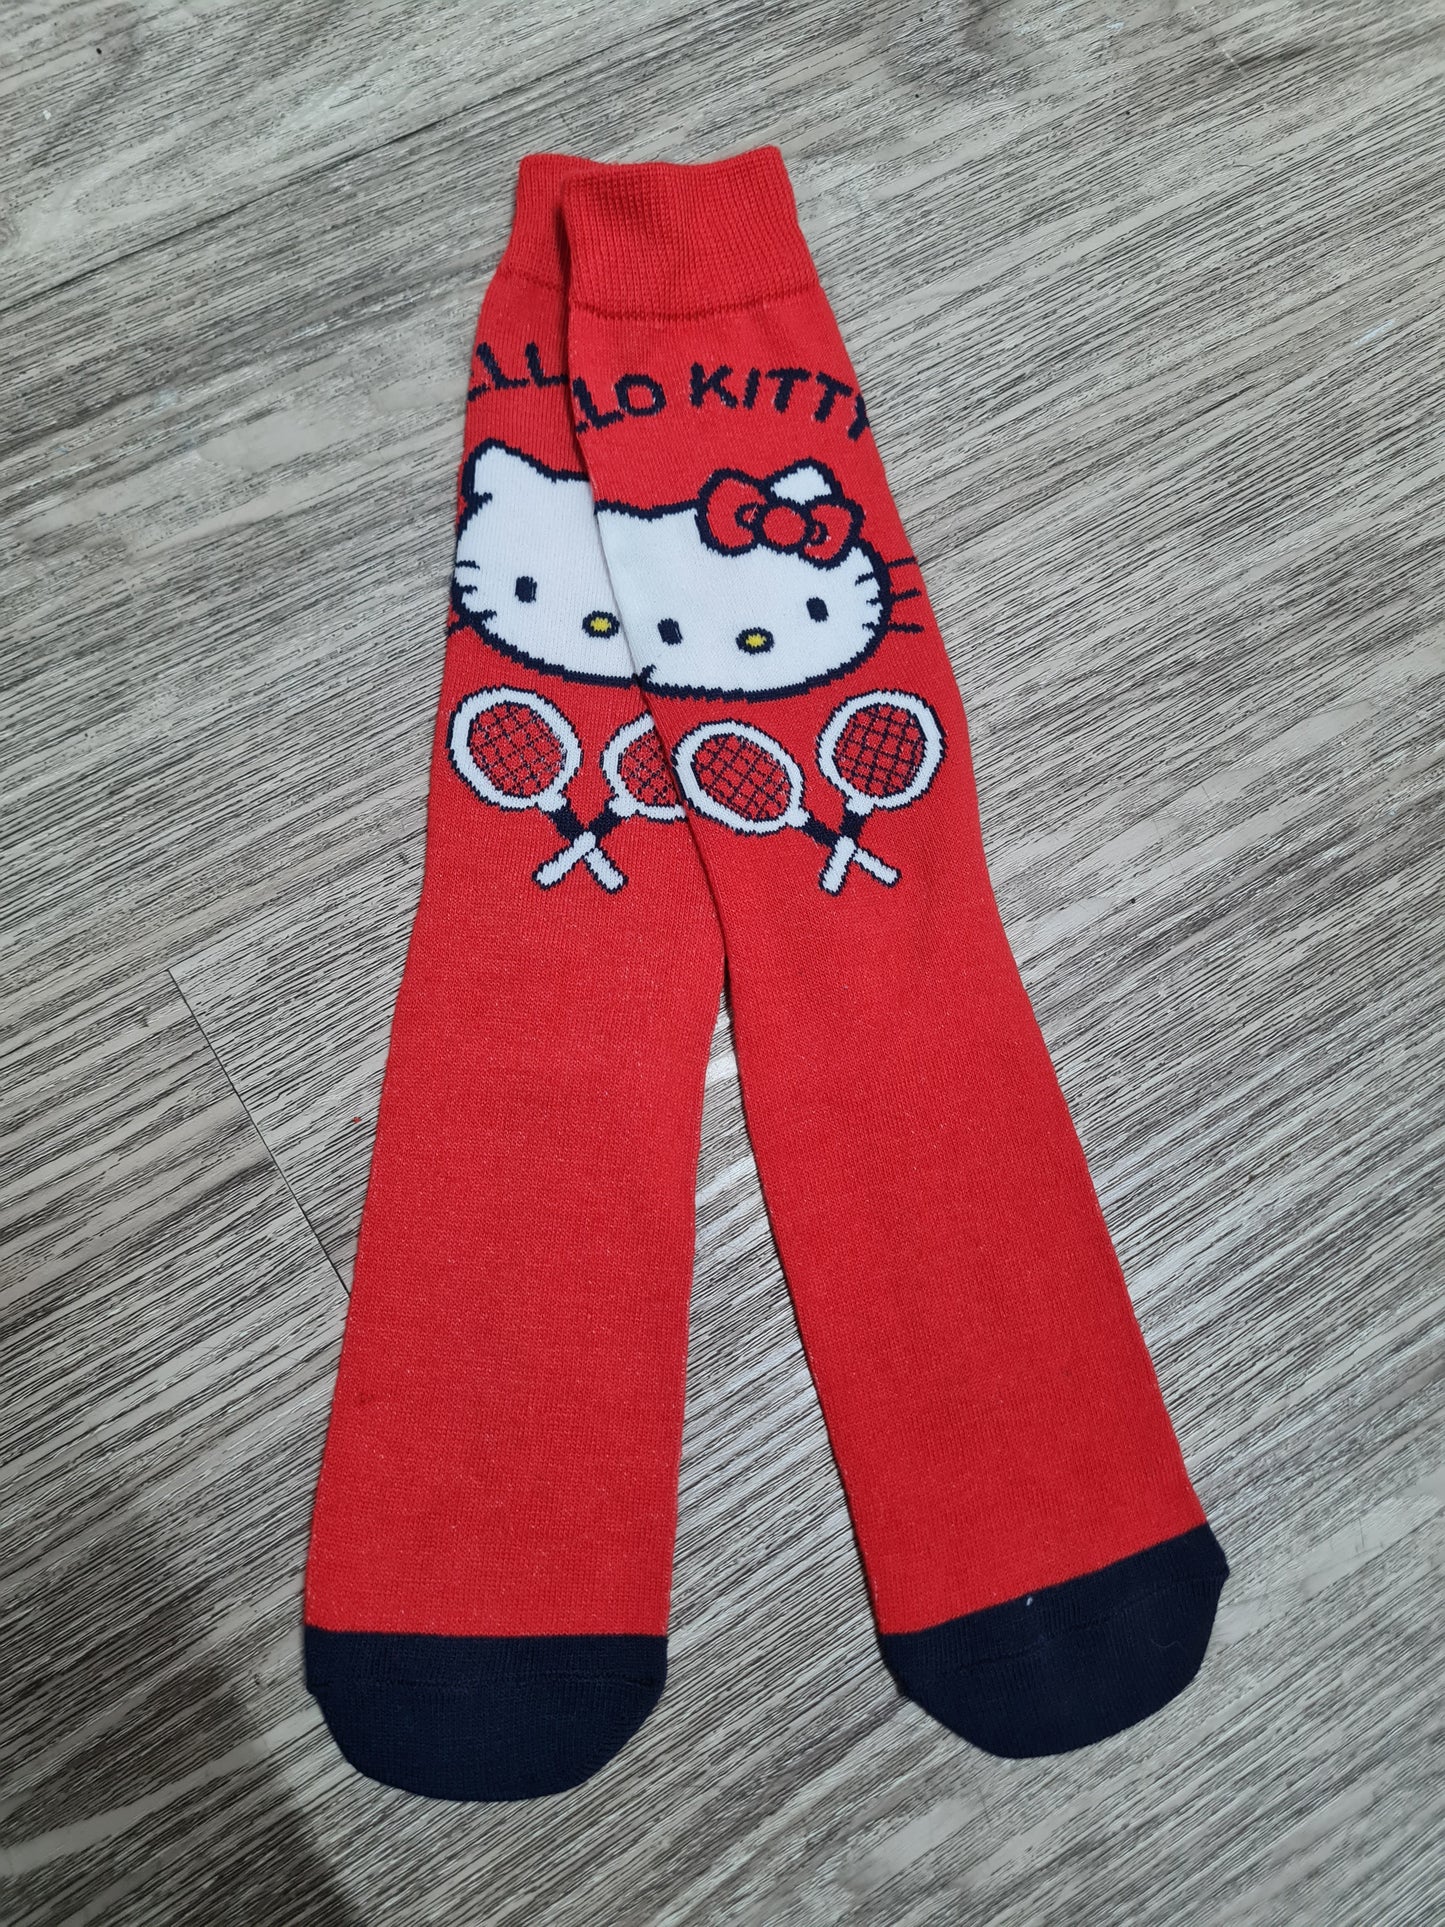 Calcetines Hello kitty rojos